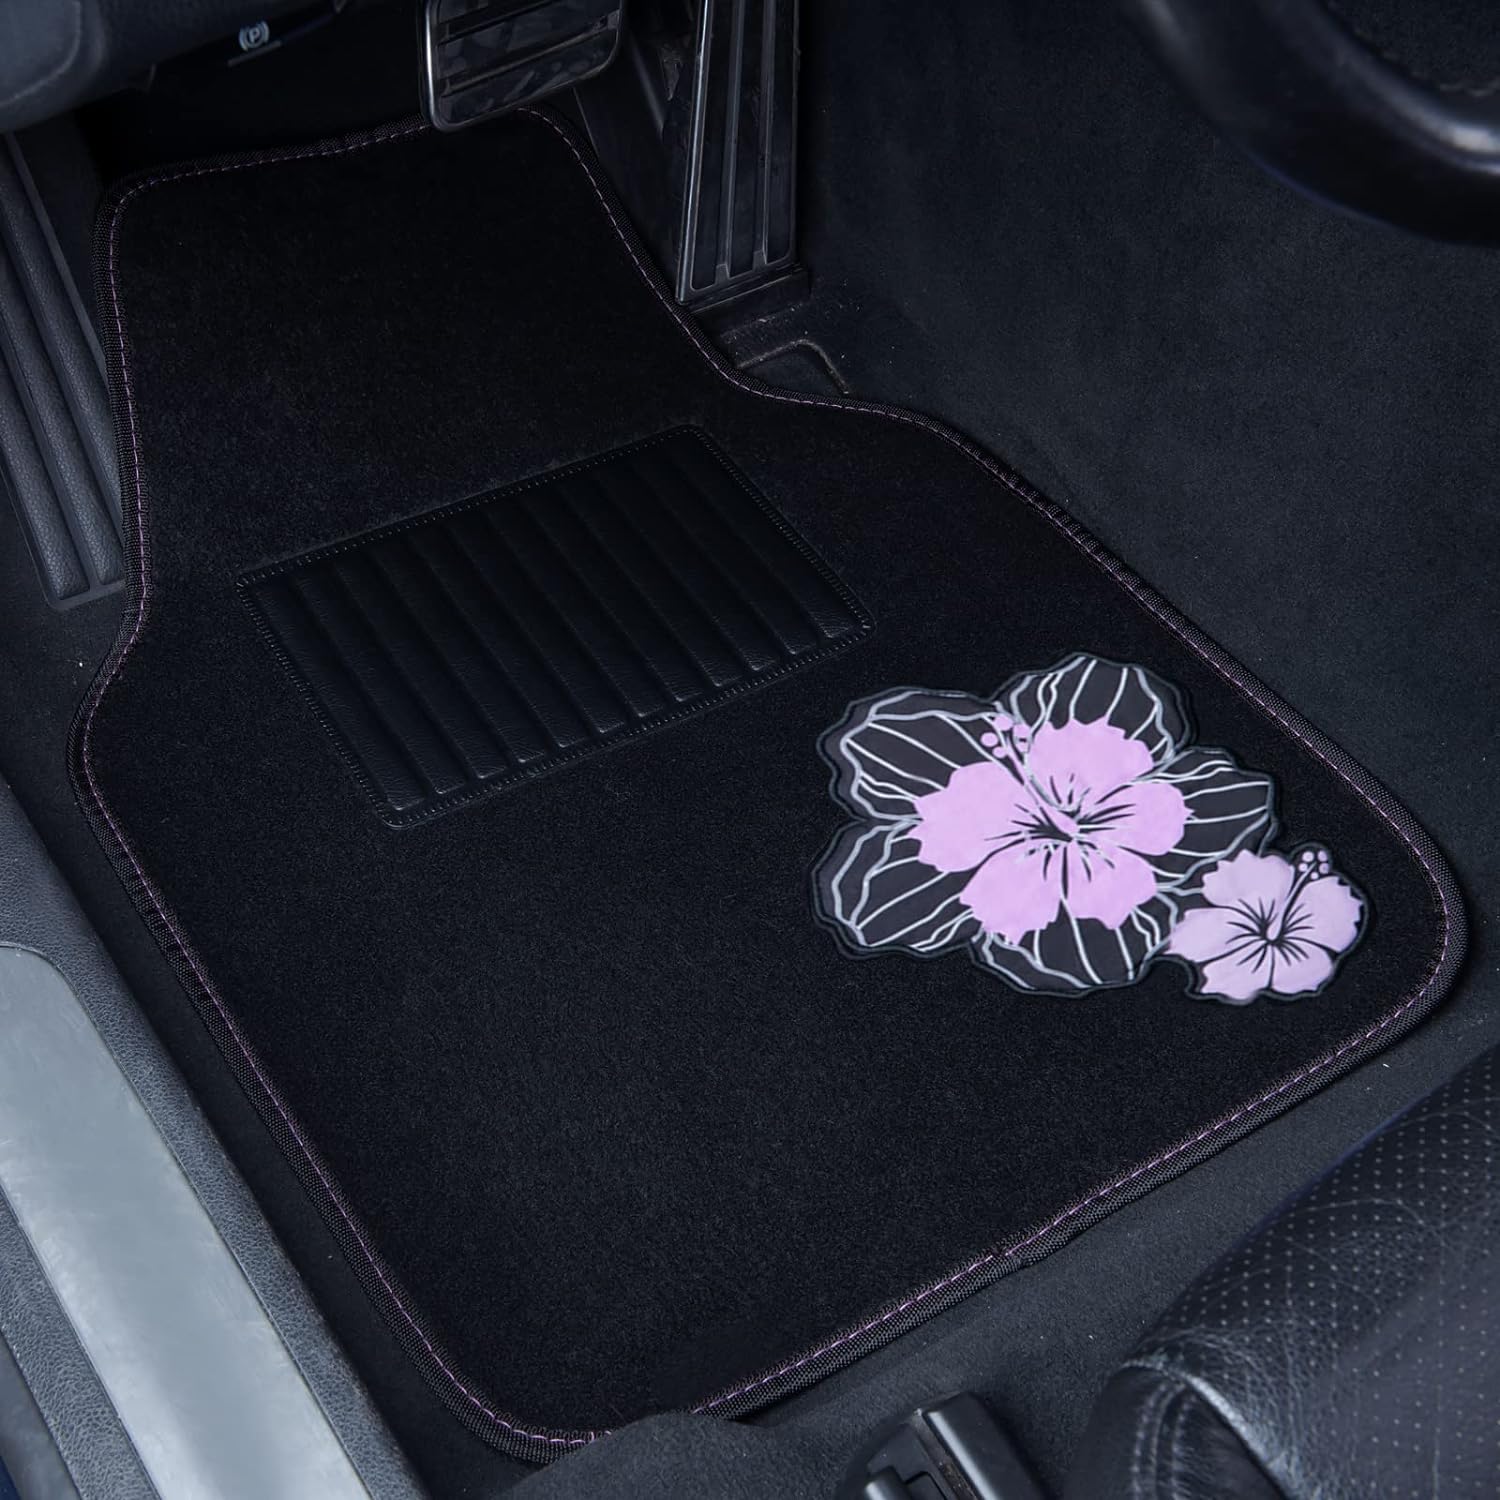 CAR PASS Cute Car Floor Mats with Hibiscus Flowers, 4 Pieces Waterproof, Anti-Slip Nibs Car Floor Mats for Women Girly, Fit Automotive,SUVS,Sedan,Vans (Black and Purple)